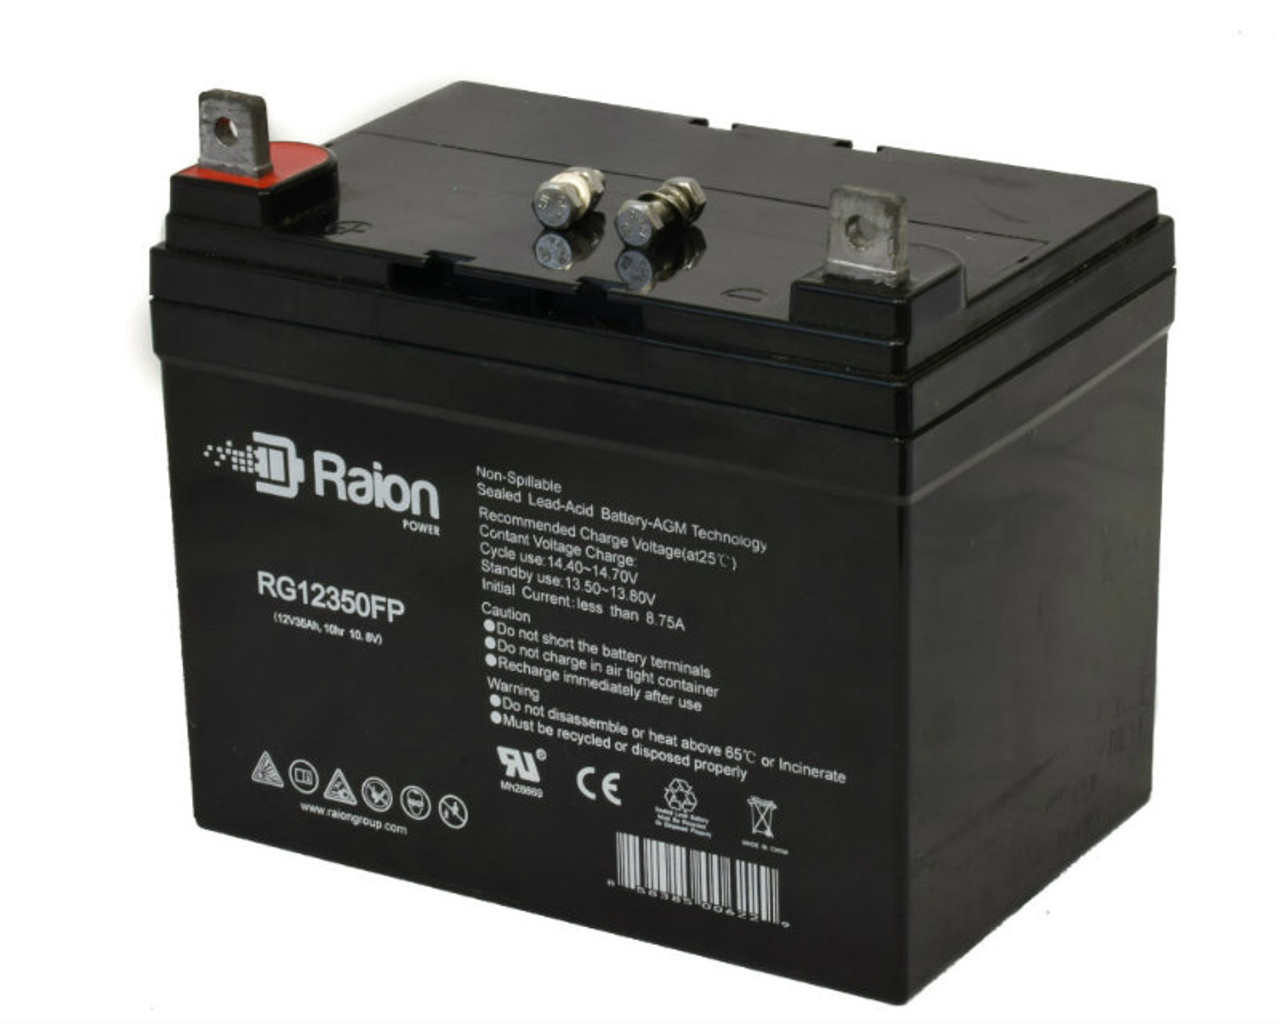 Raion Power Replacement 12V 35Ah RG12350FP Battery for Prostar PR12330